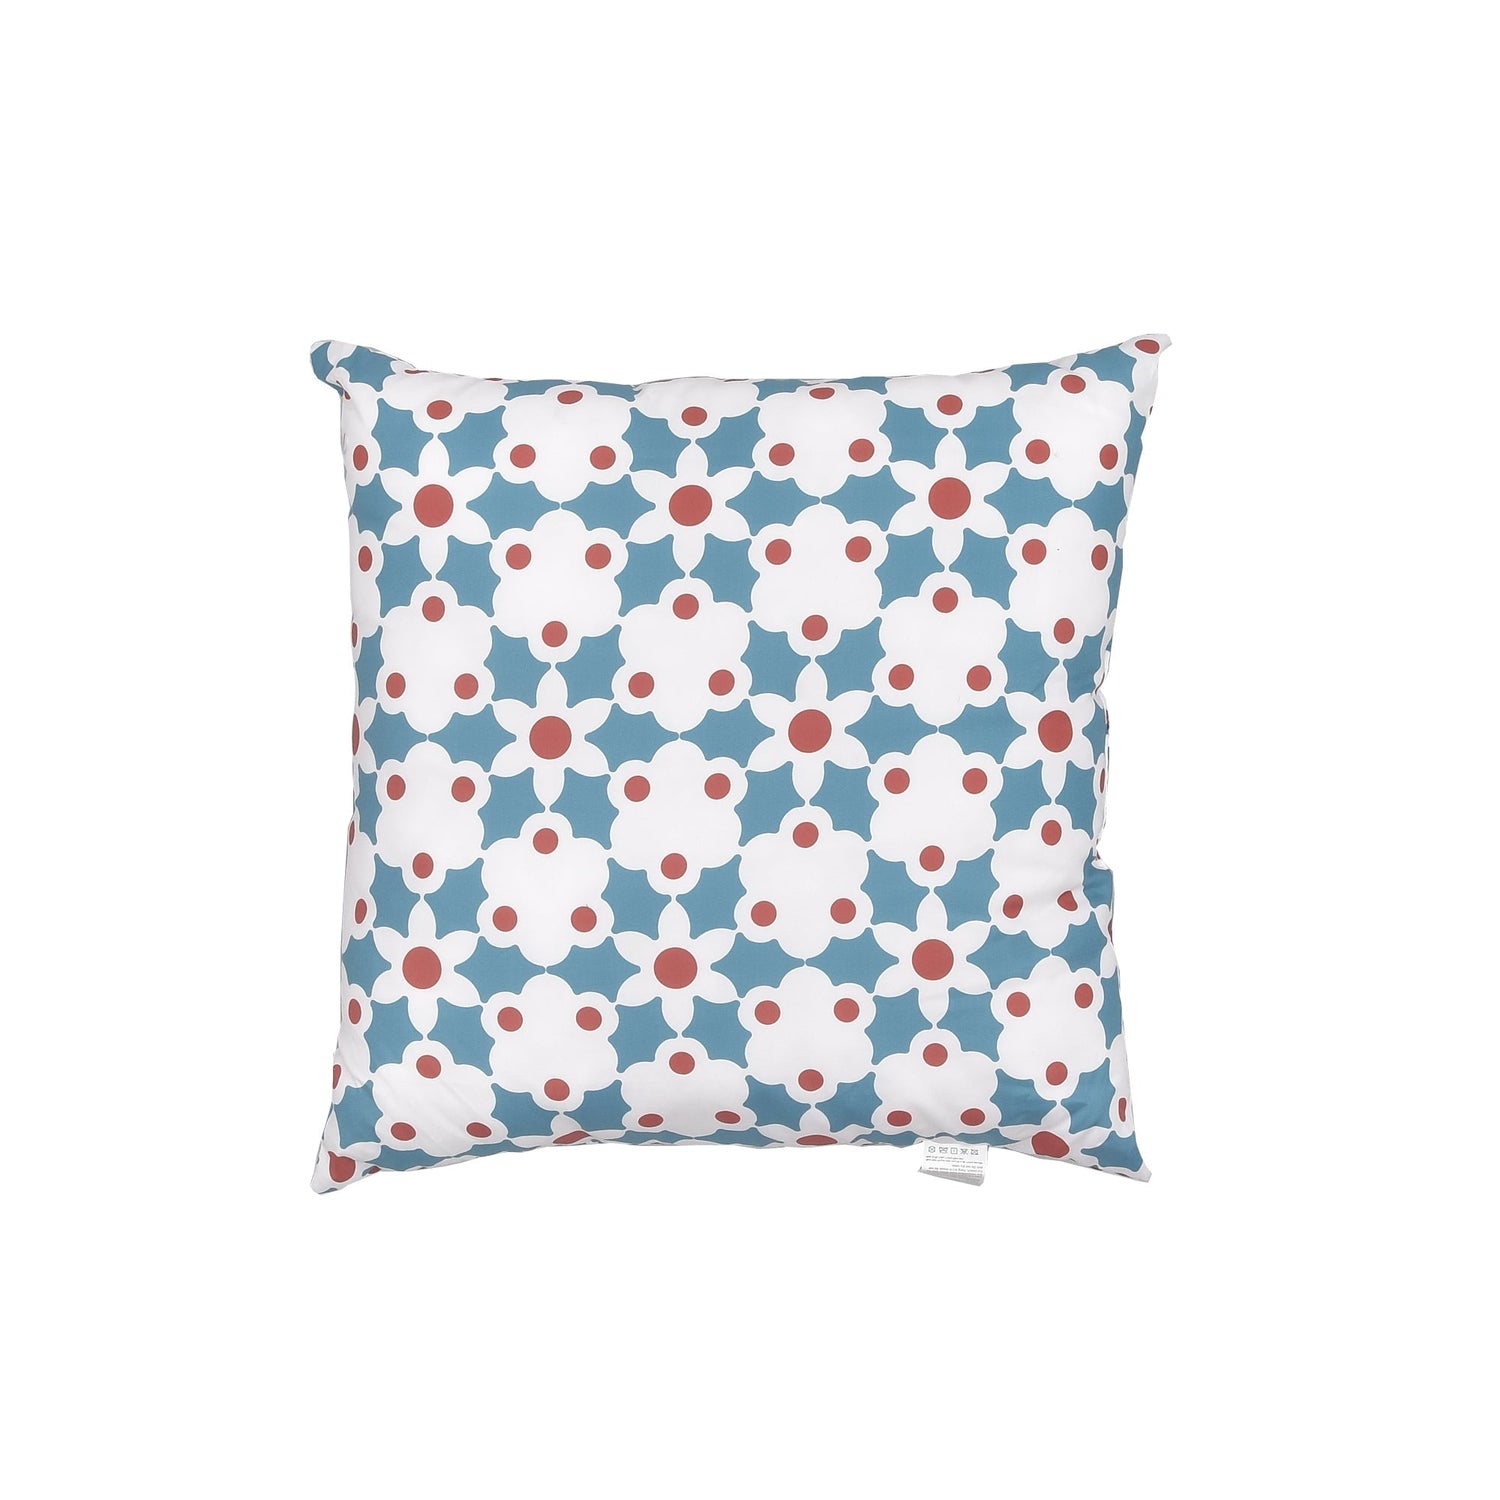 Flower Printed Throw Pillow- Blue Mumuso